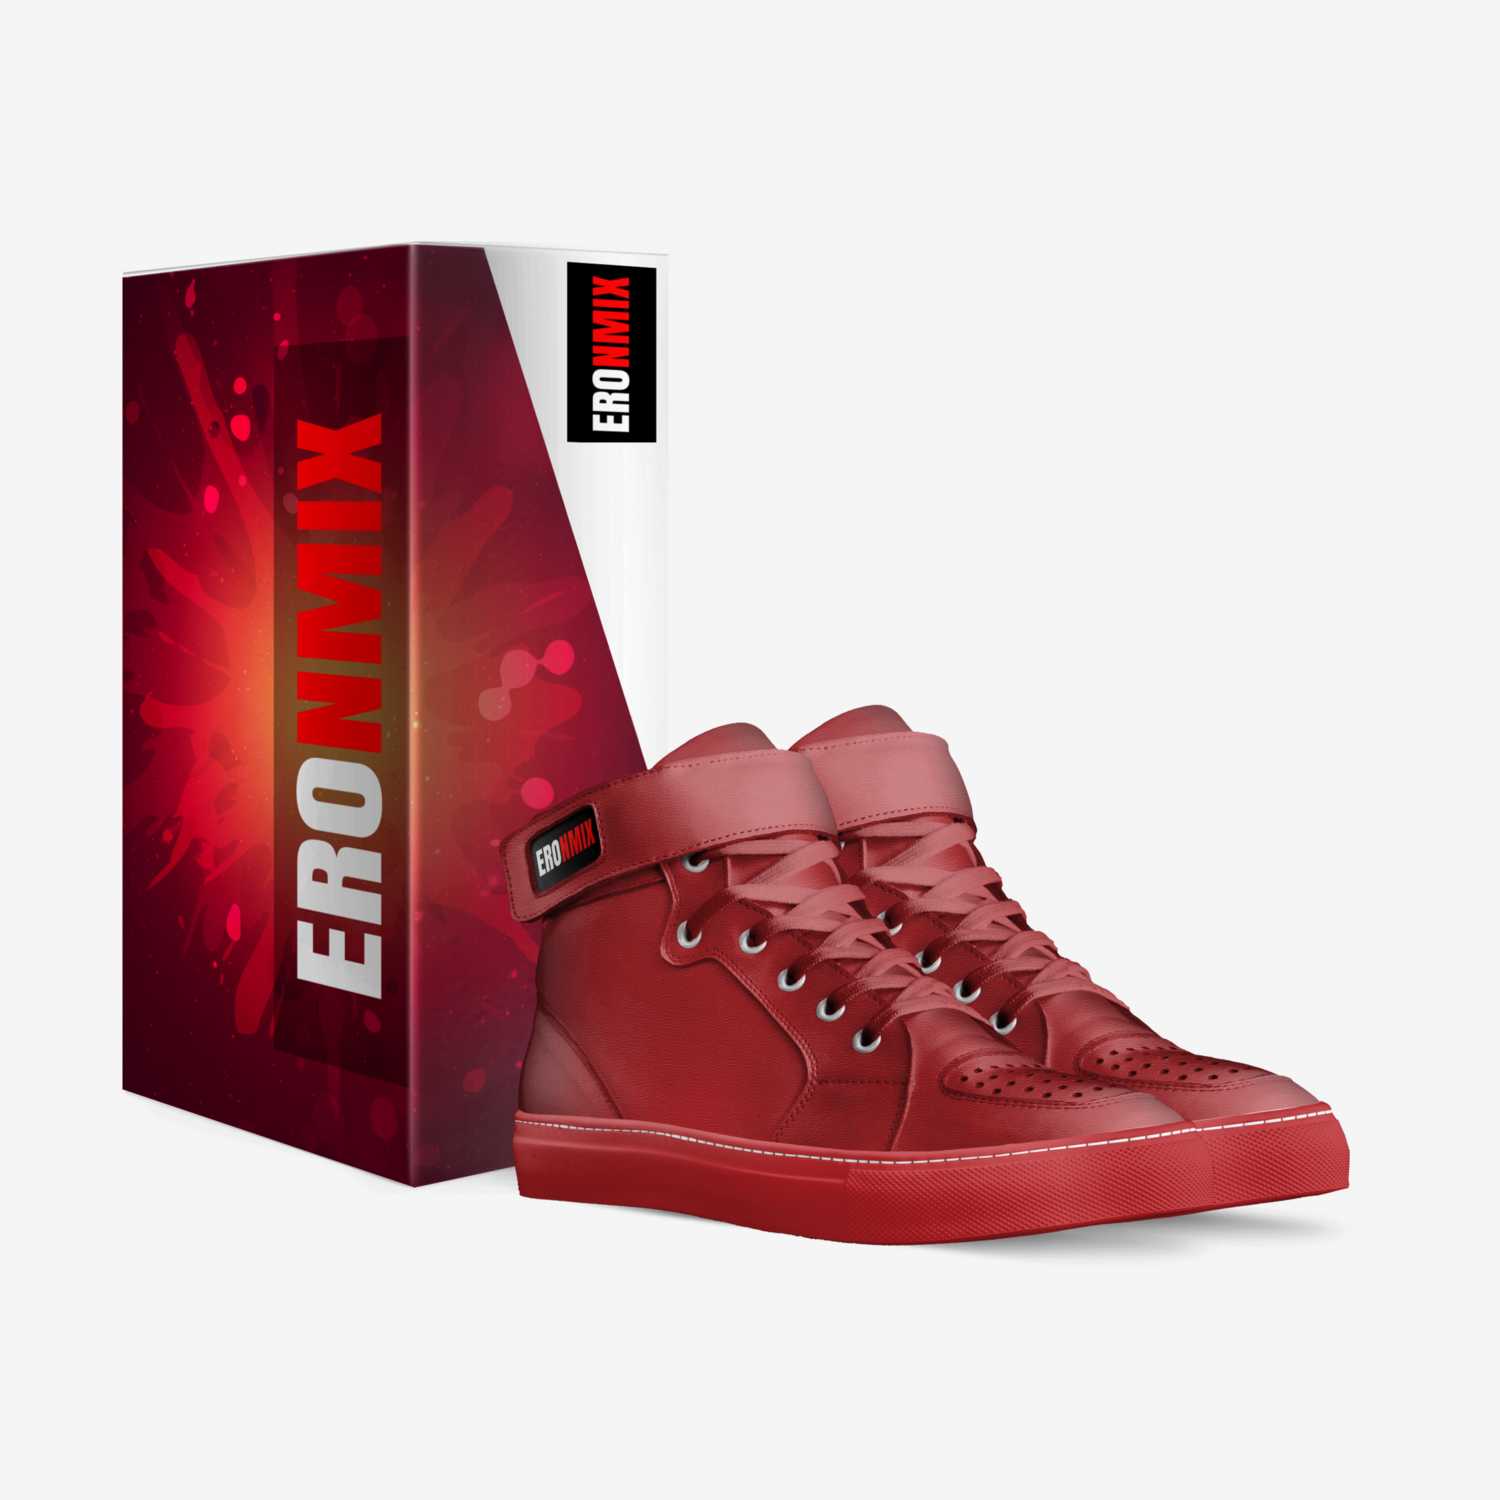 Eronmix custom made in Italy shoes by Eduardo Ramirez | Box view